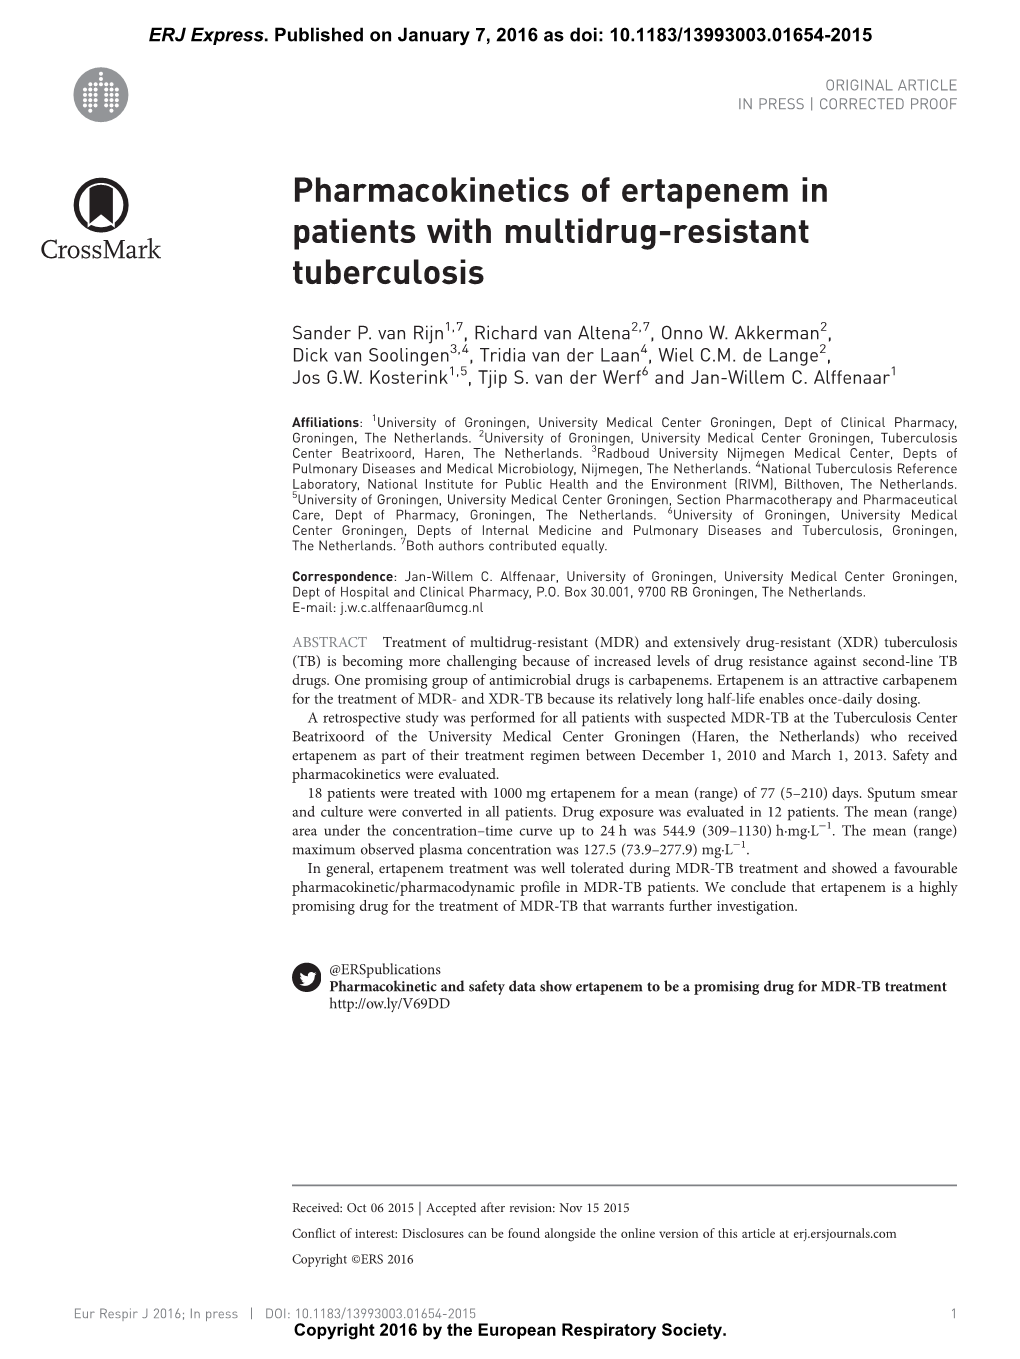 Pharmacokinetics of Ertapenem in Patients with Multidrug-Resistant Tuberculosis